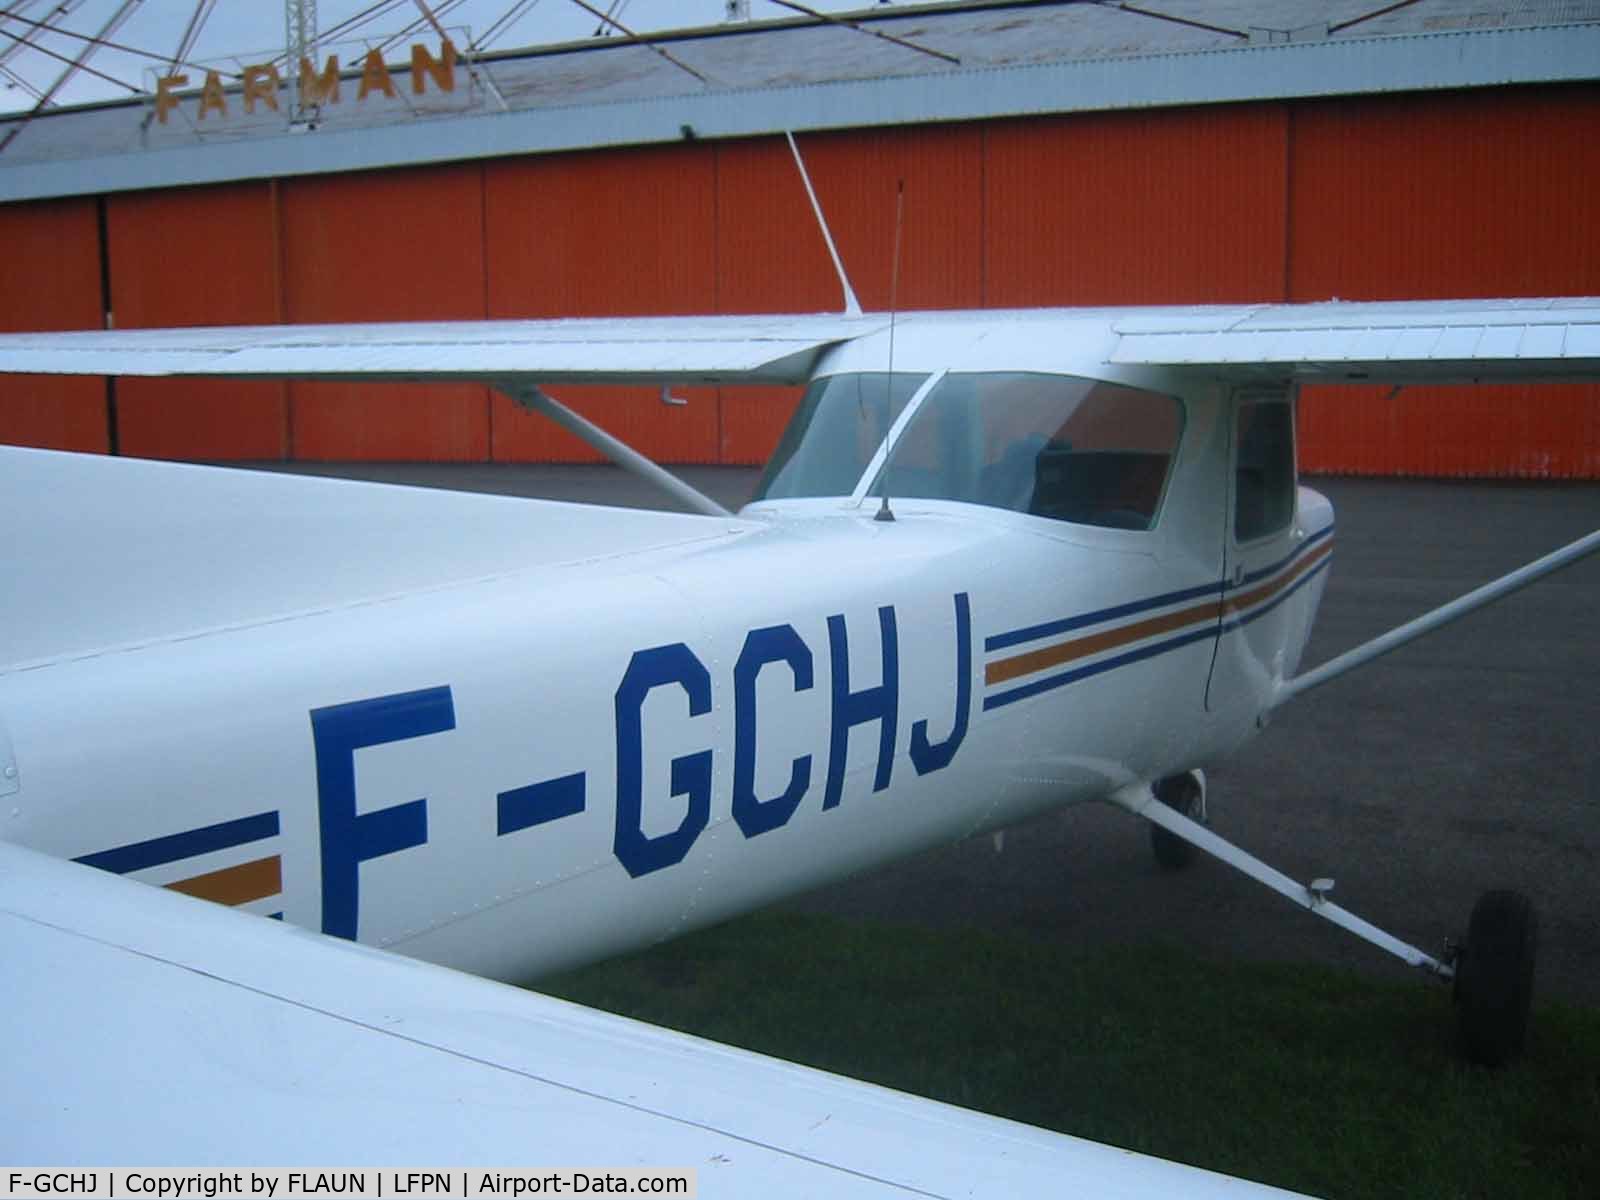 F-GCHJ, Reims F152 C/N 1702, F-GCHJ
2006
AIR SCHOOL : AEROPILOT
TOUSSUS LE NOBLE
FRANCE